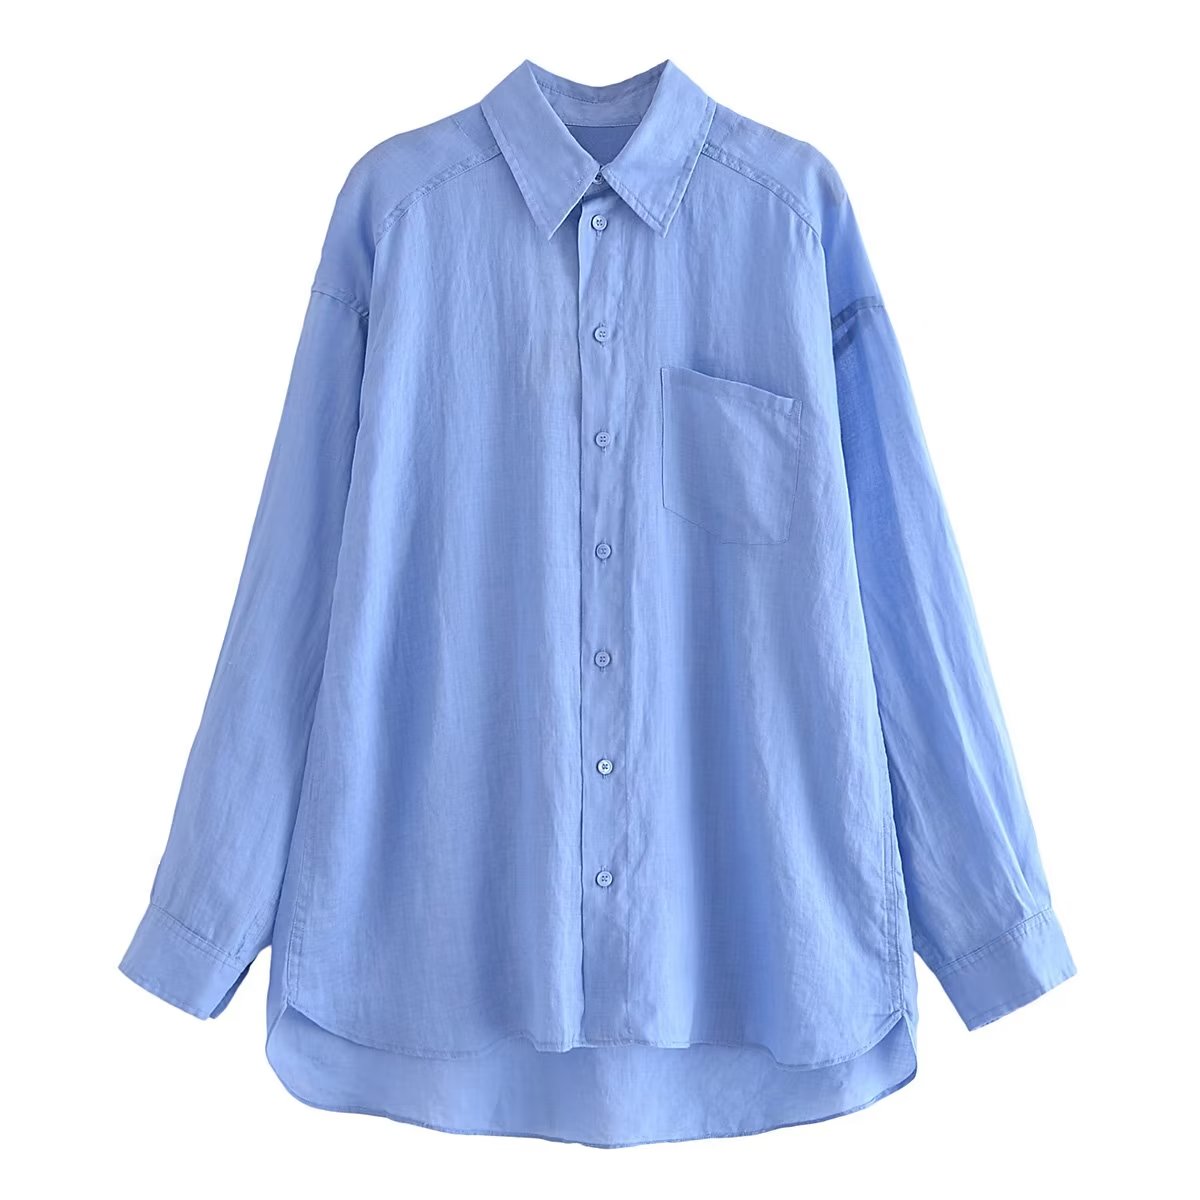 Spring Women Collared Pocket Long Sleeve Loose Shirt Top